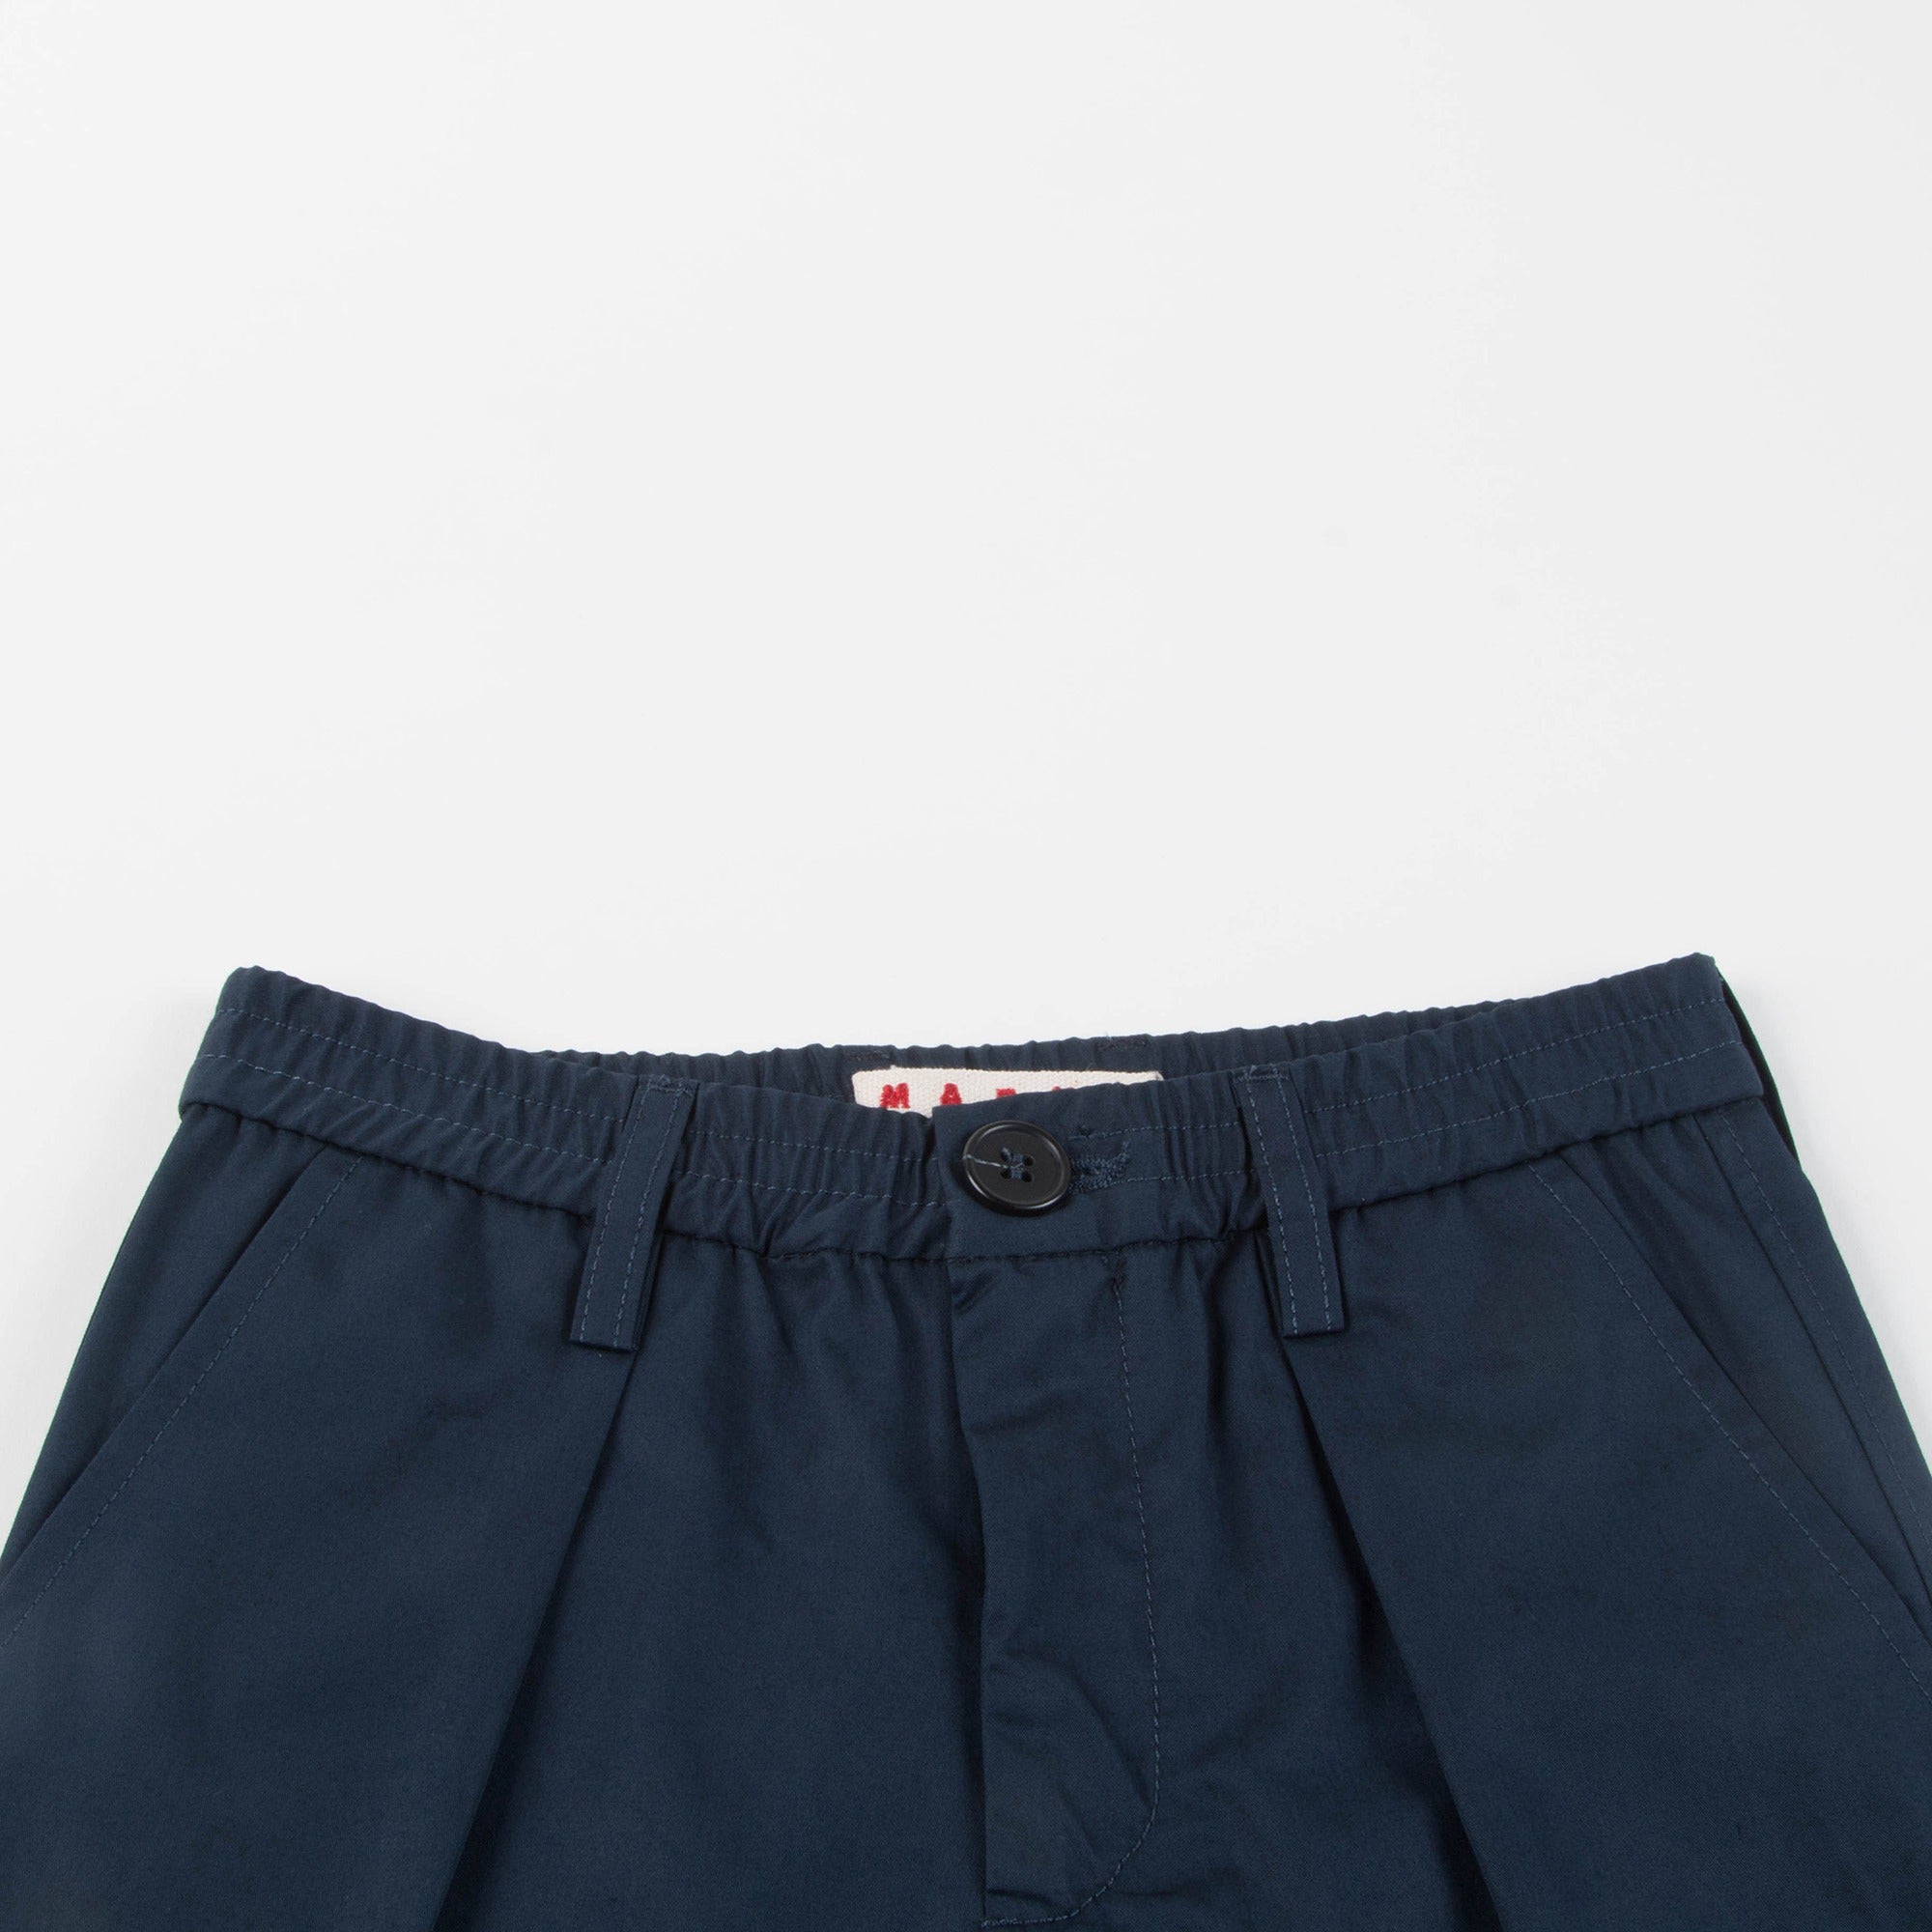 Boys Navy Blue Cotton Trousers